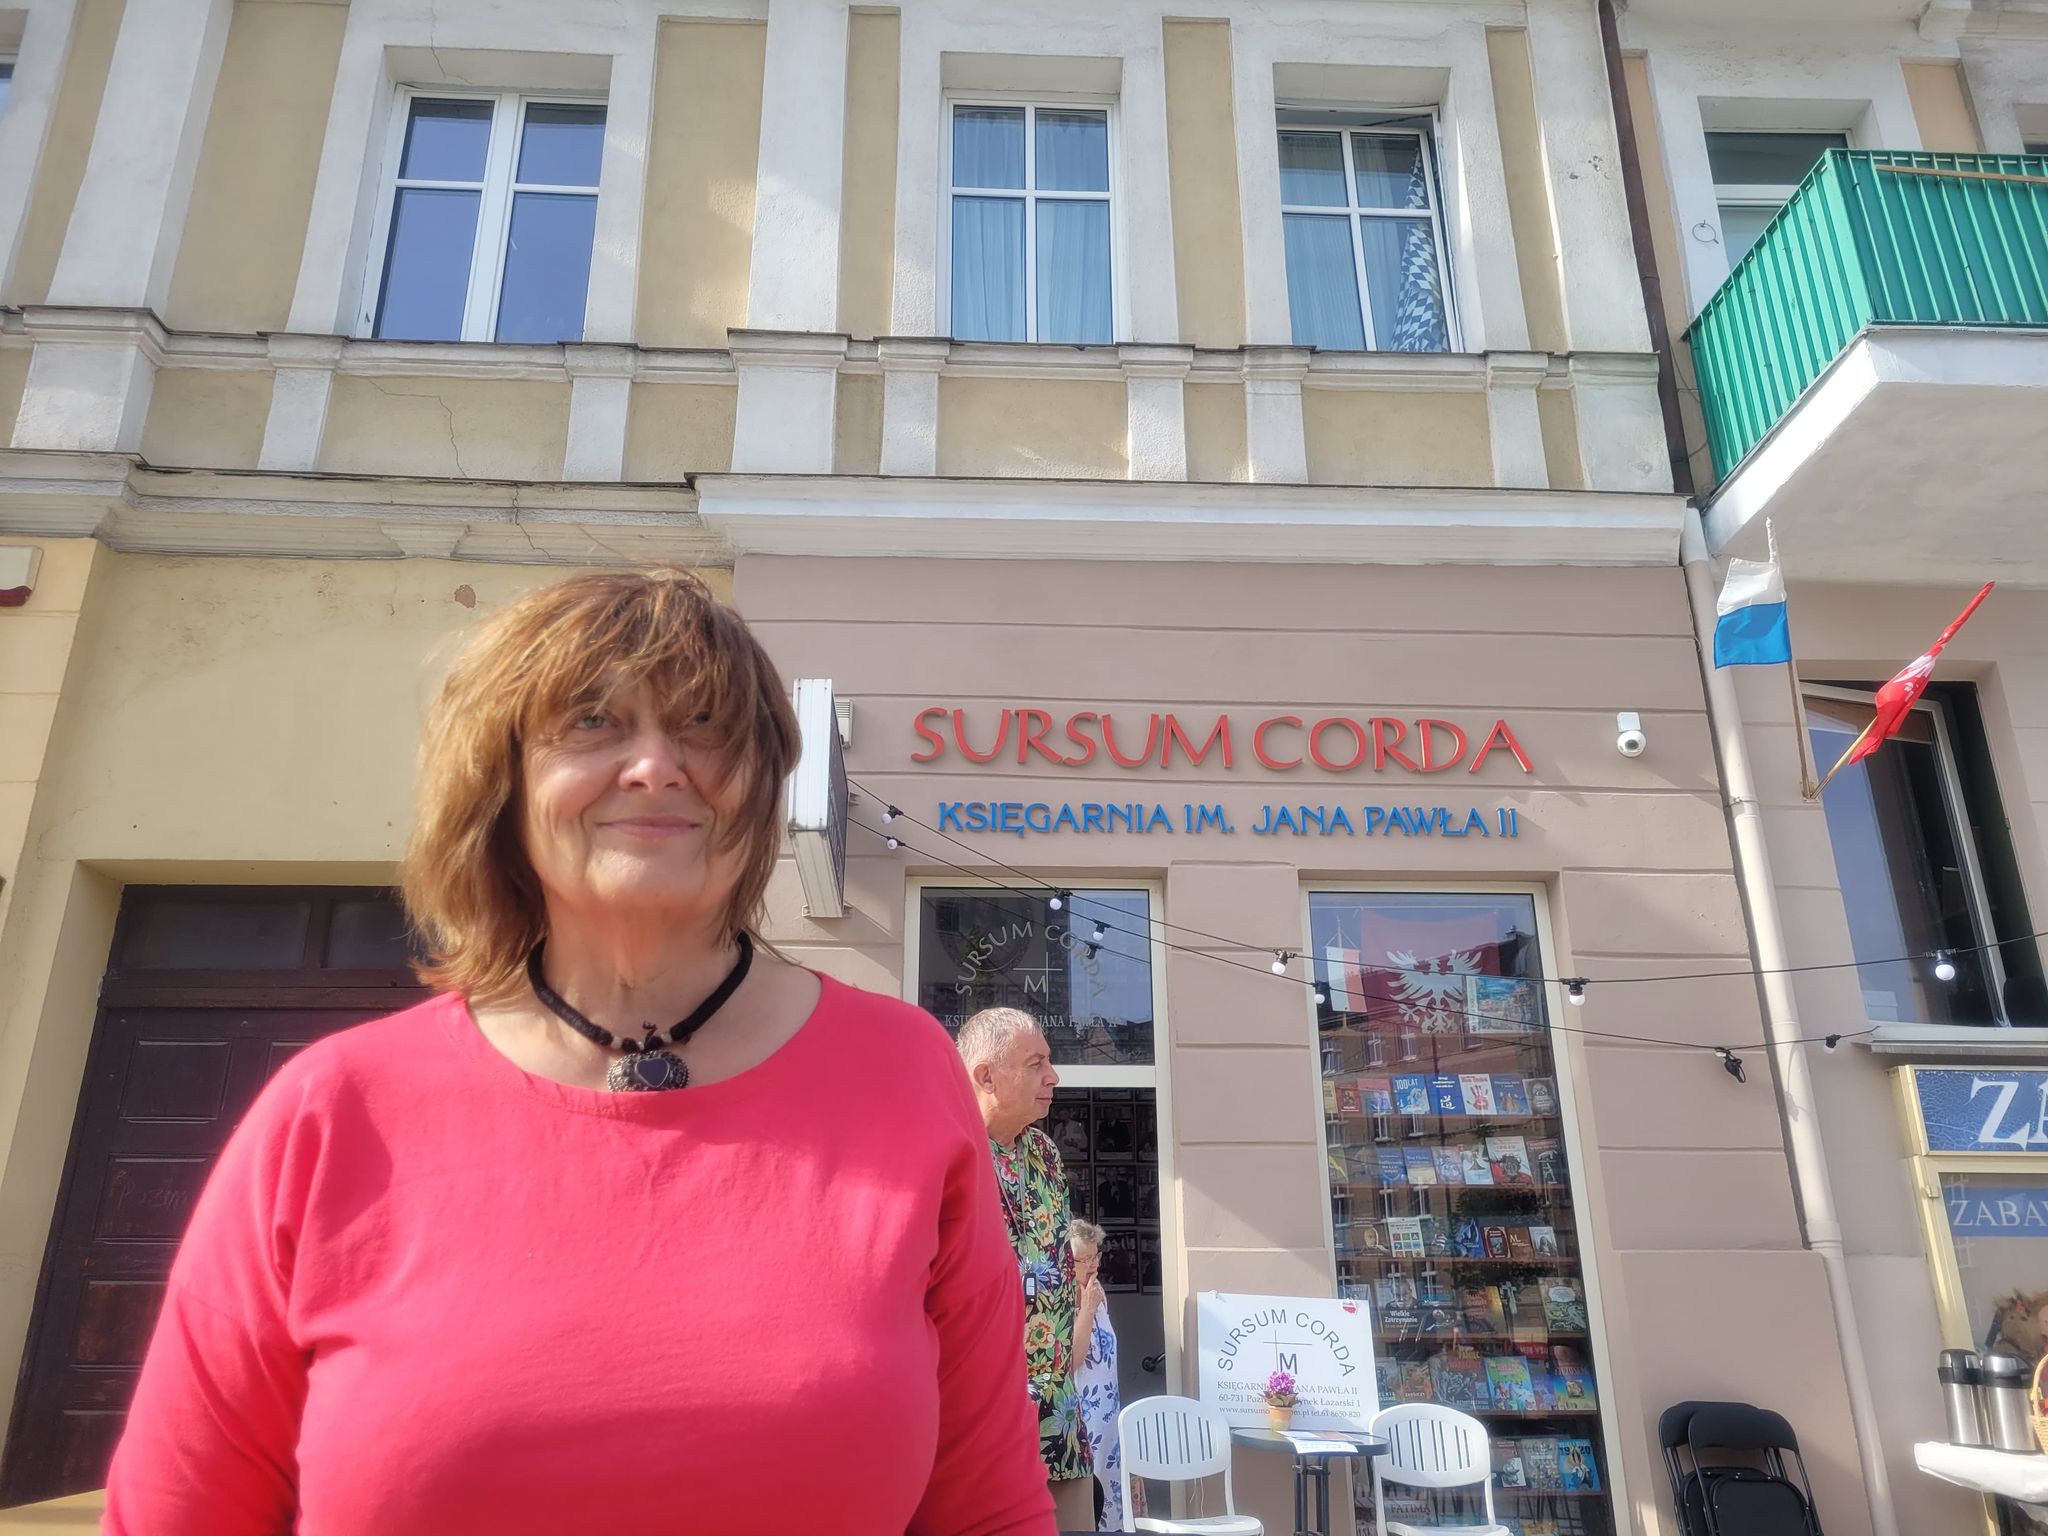 Księgarnia "Sursum Corda" świętuje - Hubert Jach